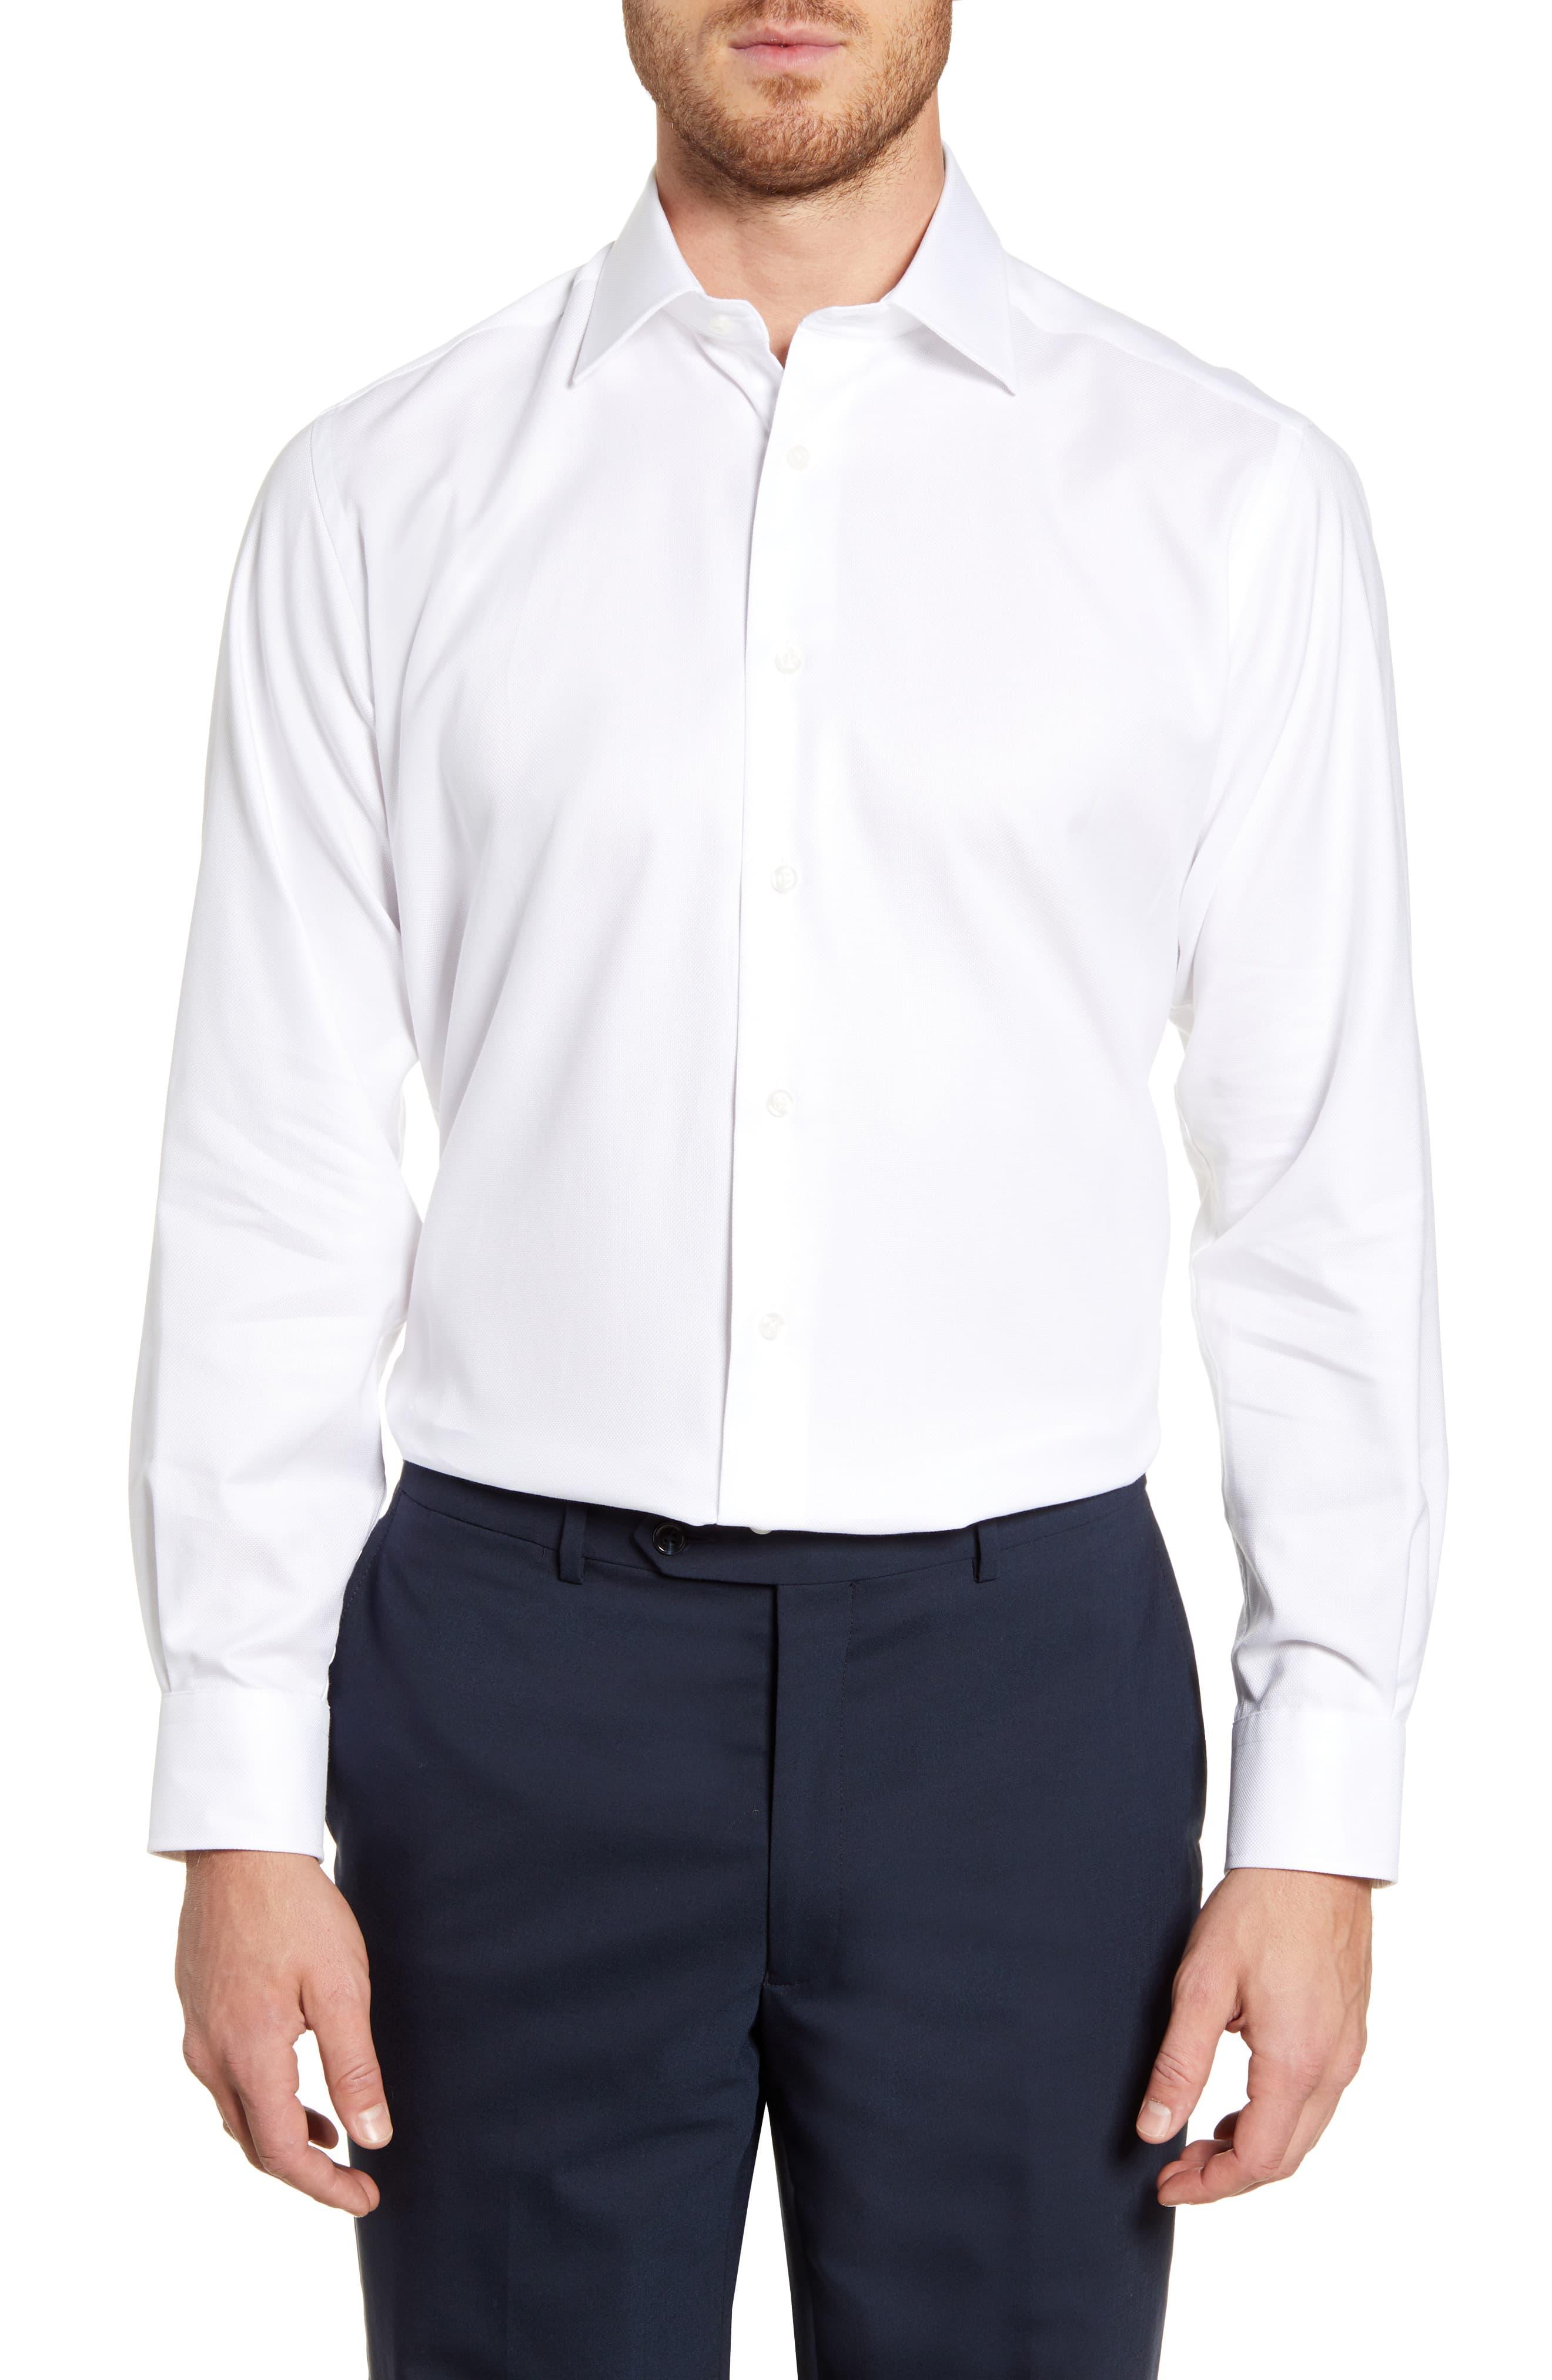 David Donahue Regular Fit Oxford Dress Shirt in White for Men - Lyst